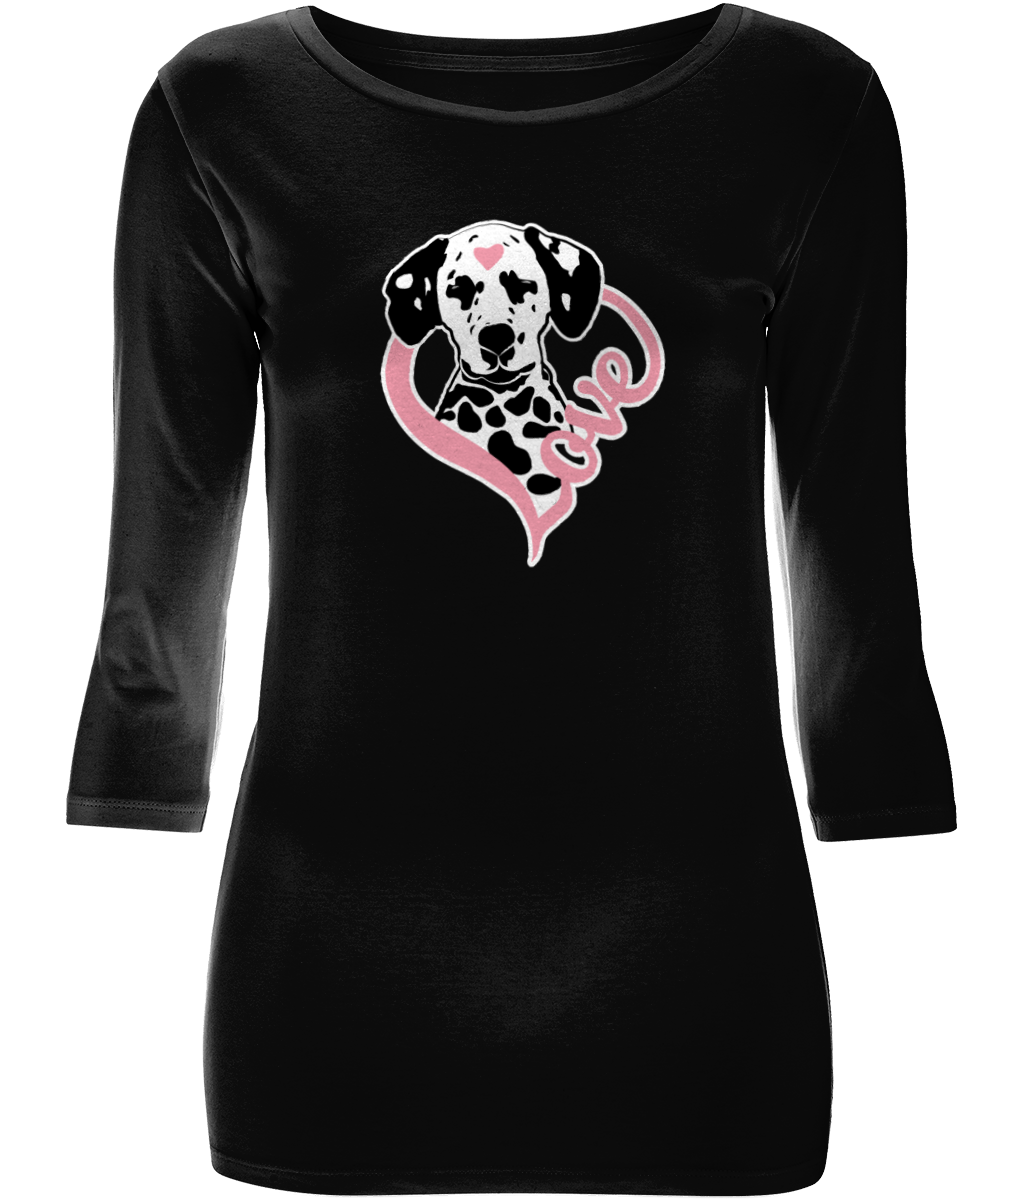 Dalmatian Women's 3/4 Sleeve Stretch T-Shirt (Pink)